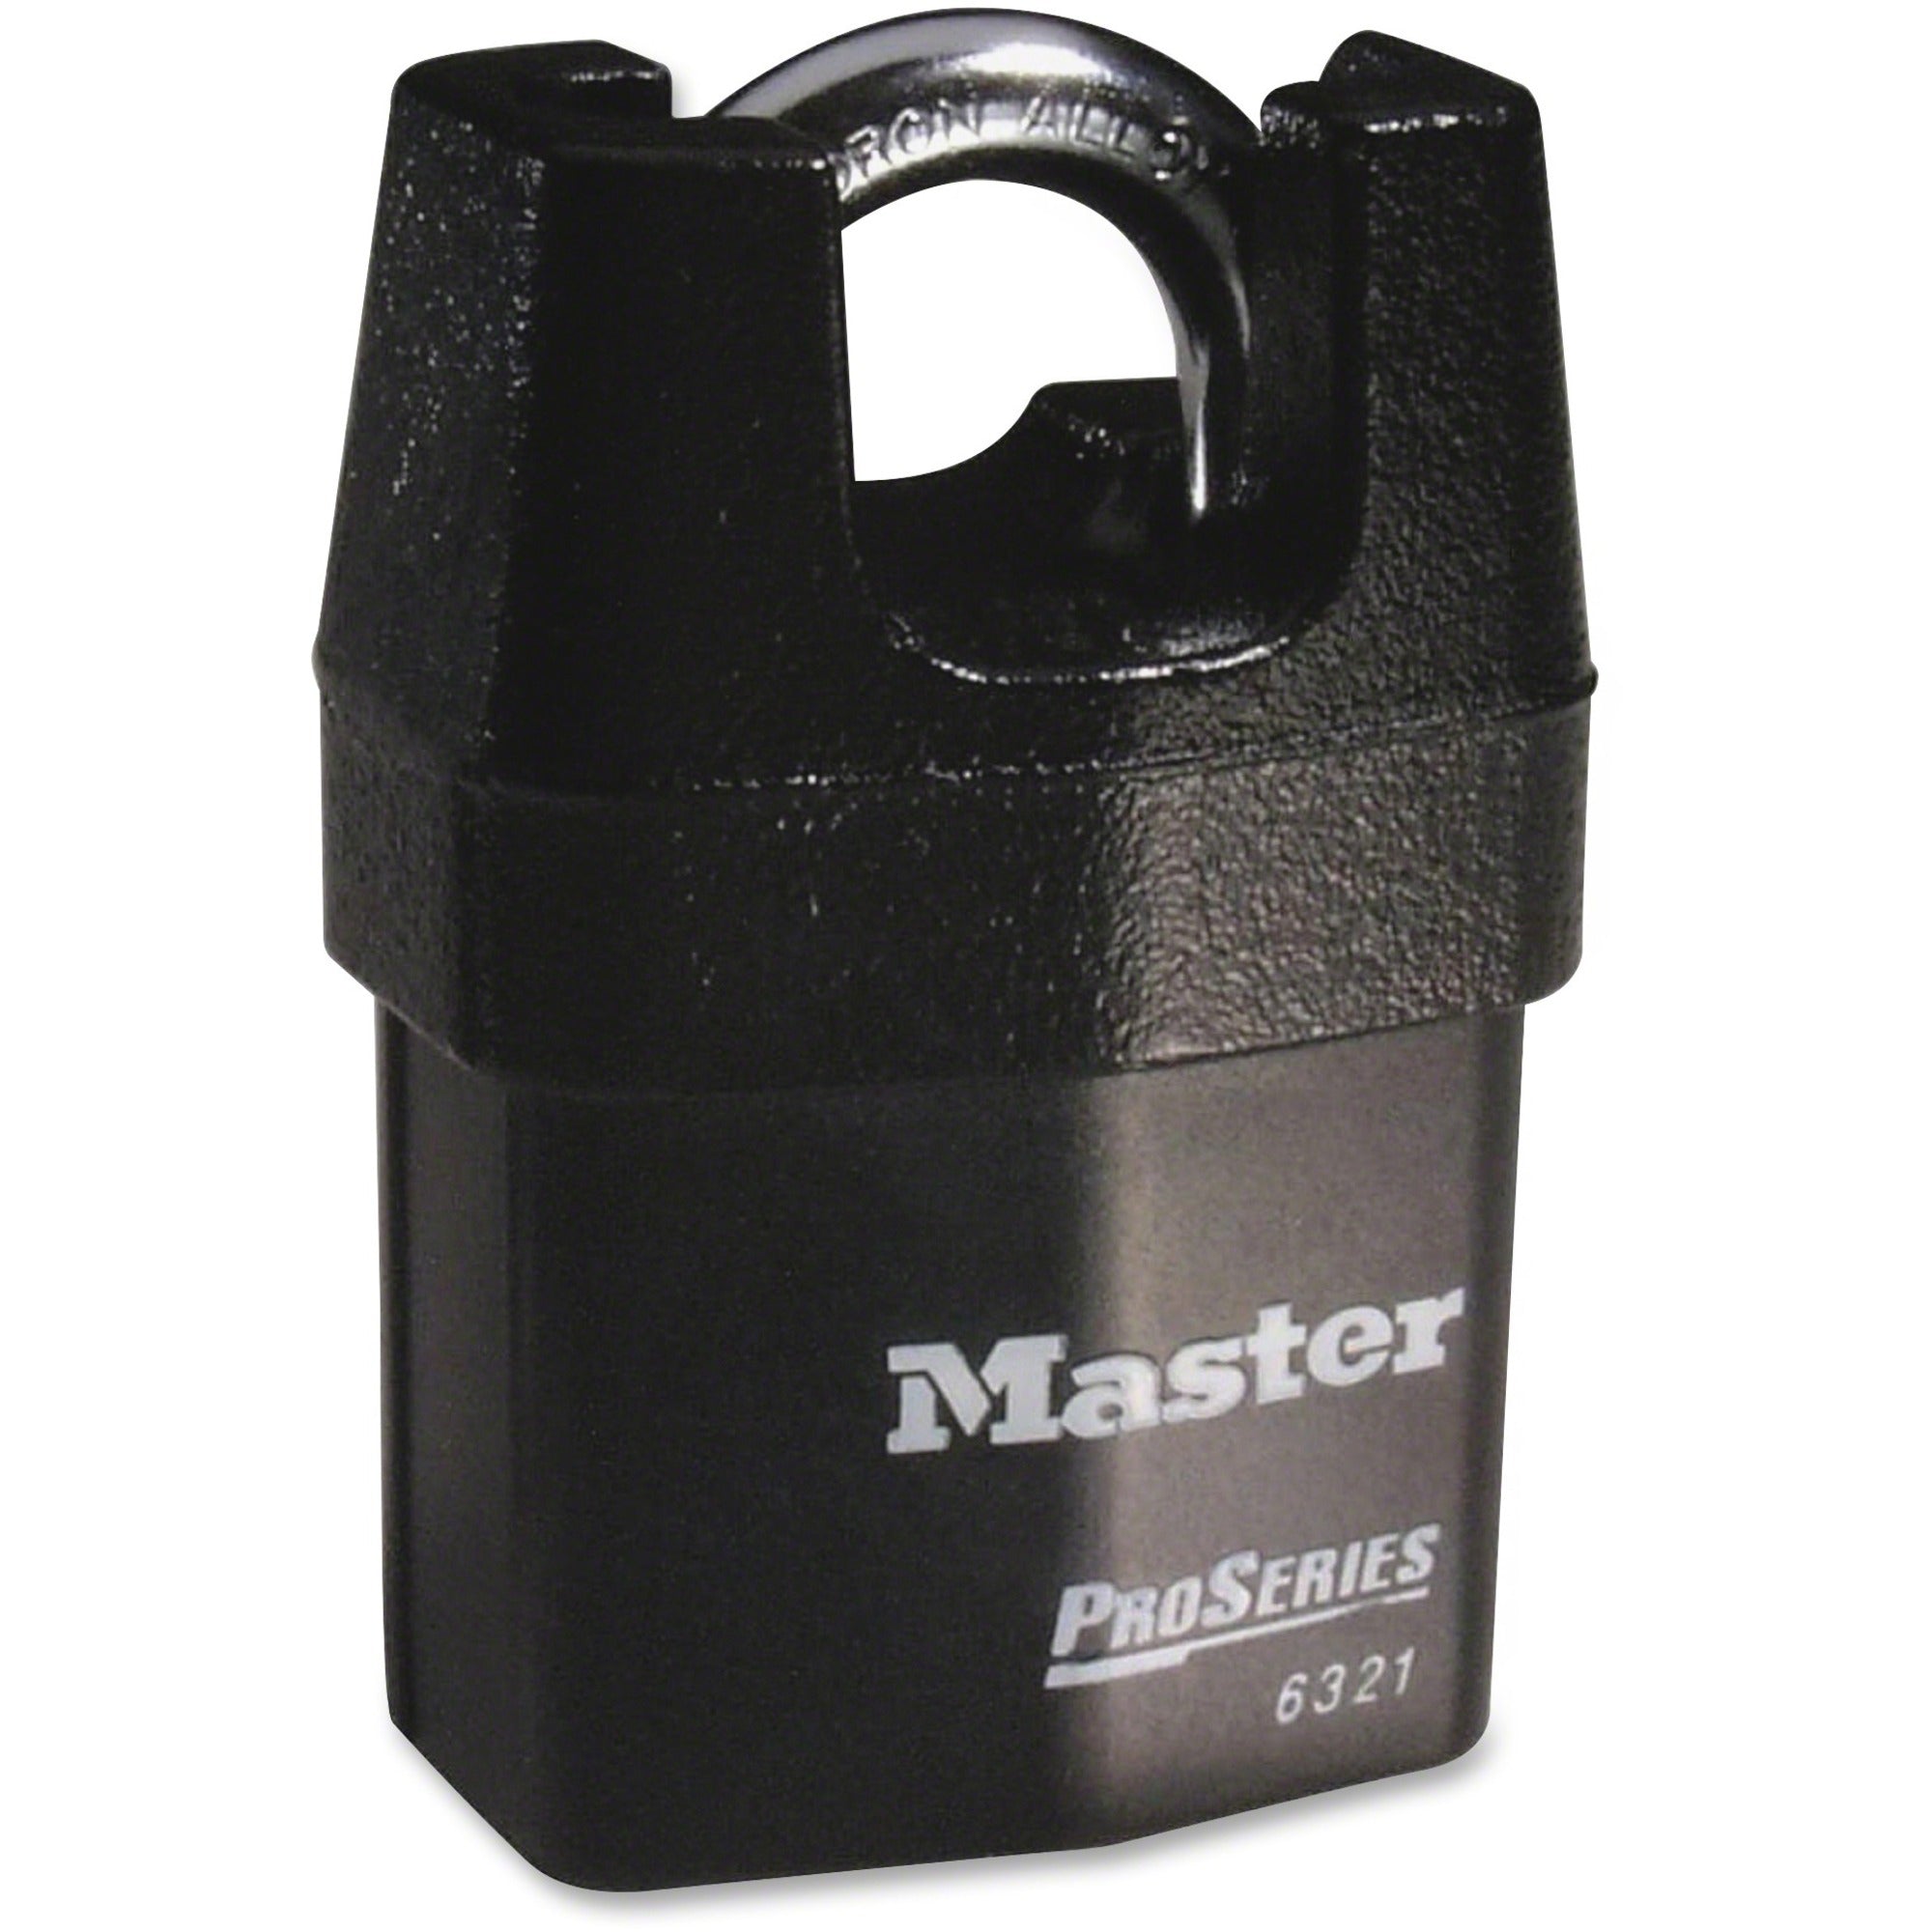 Master Lock Boron Shackle Pro Series Padlock - Keyed Different - 0.31" Shackle Diameter - Cut Resistant, Pry Resistant - Steel - Black - 1 Each - 